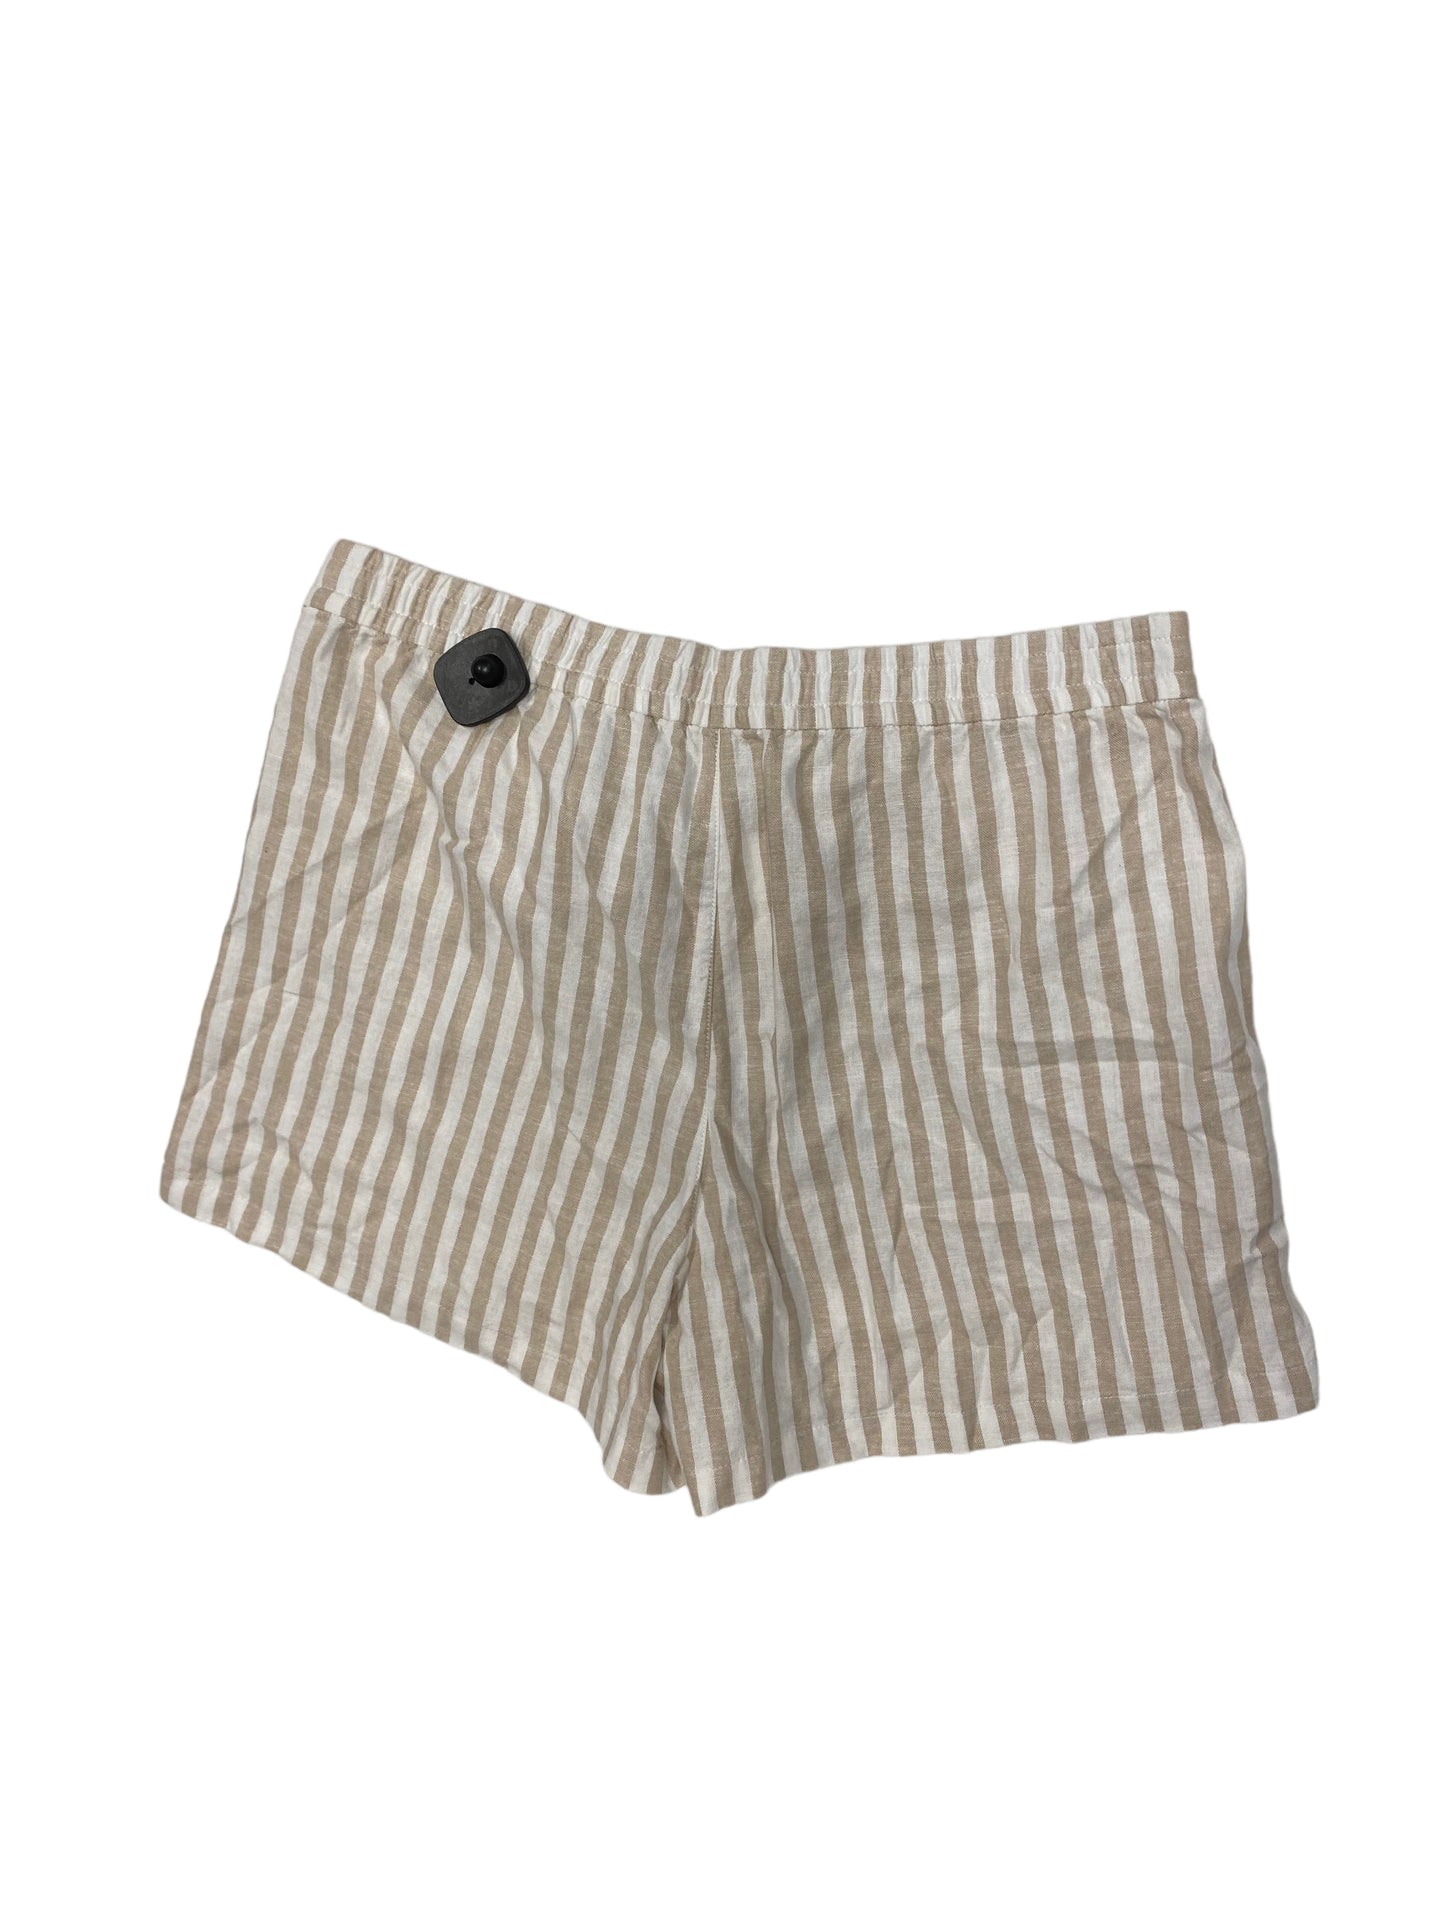 Striped Pattern Shorts J. Crew, Size L